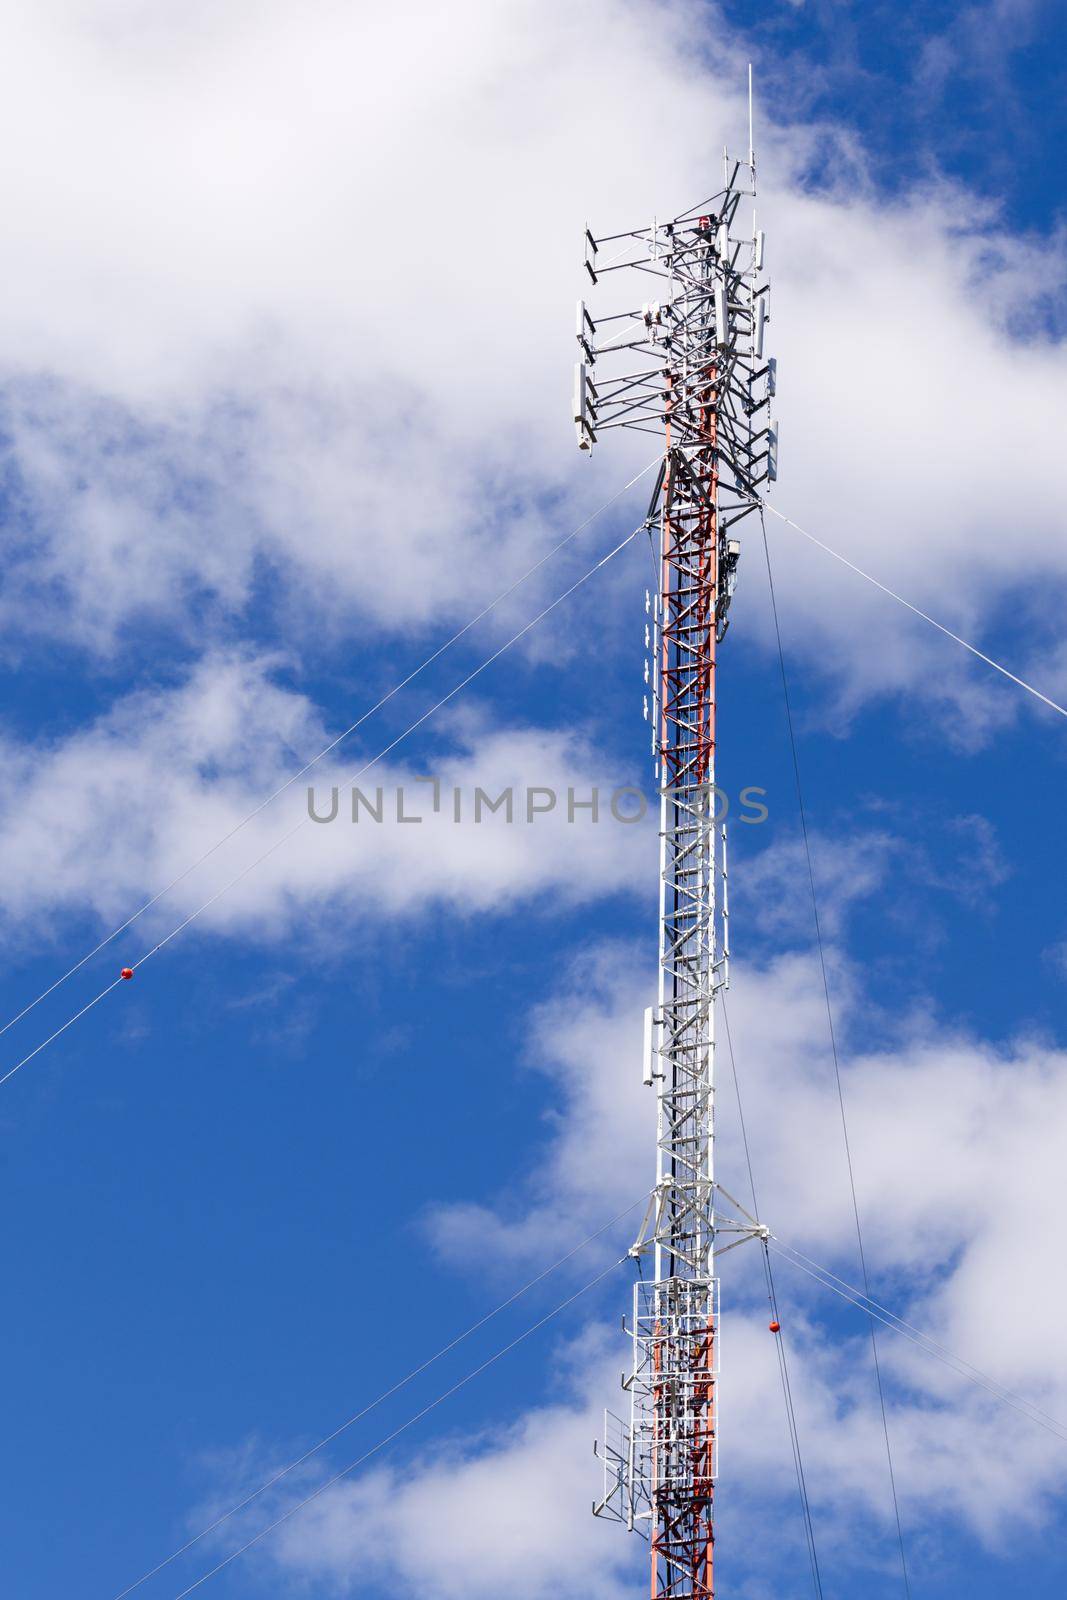 Communications antenna lattice truss tower by PiLens